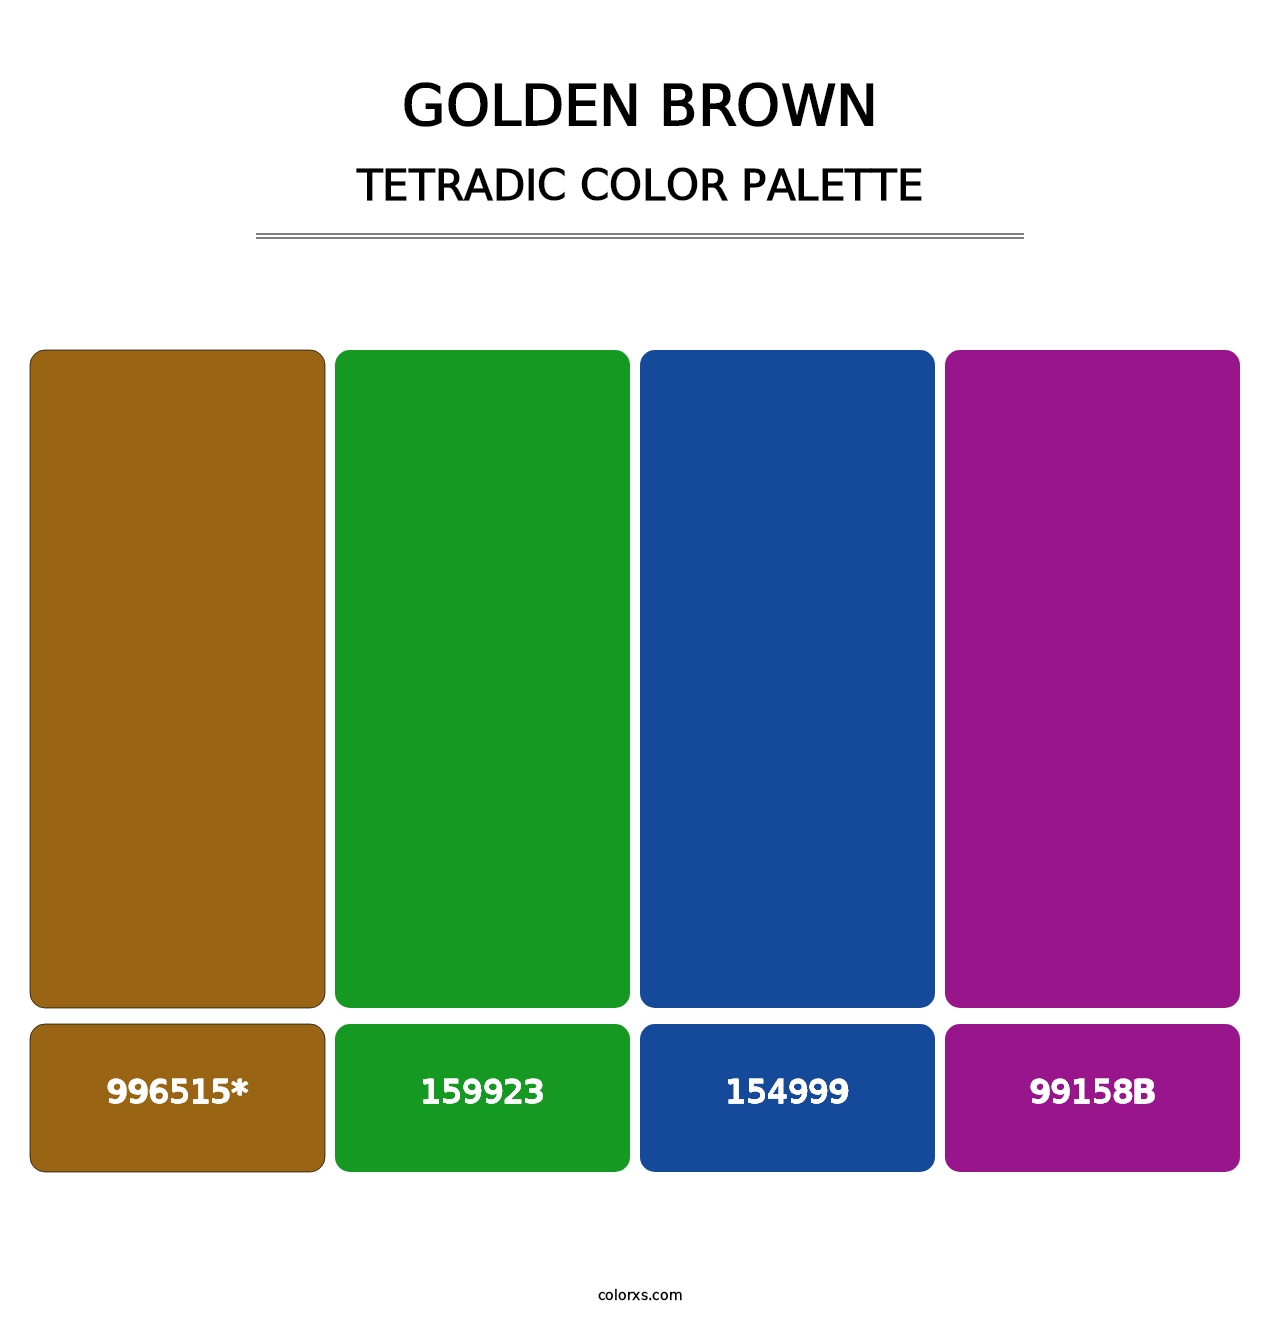 Golden brown - Tetradic Color Palette